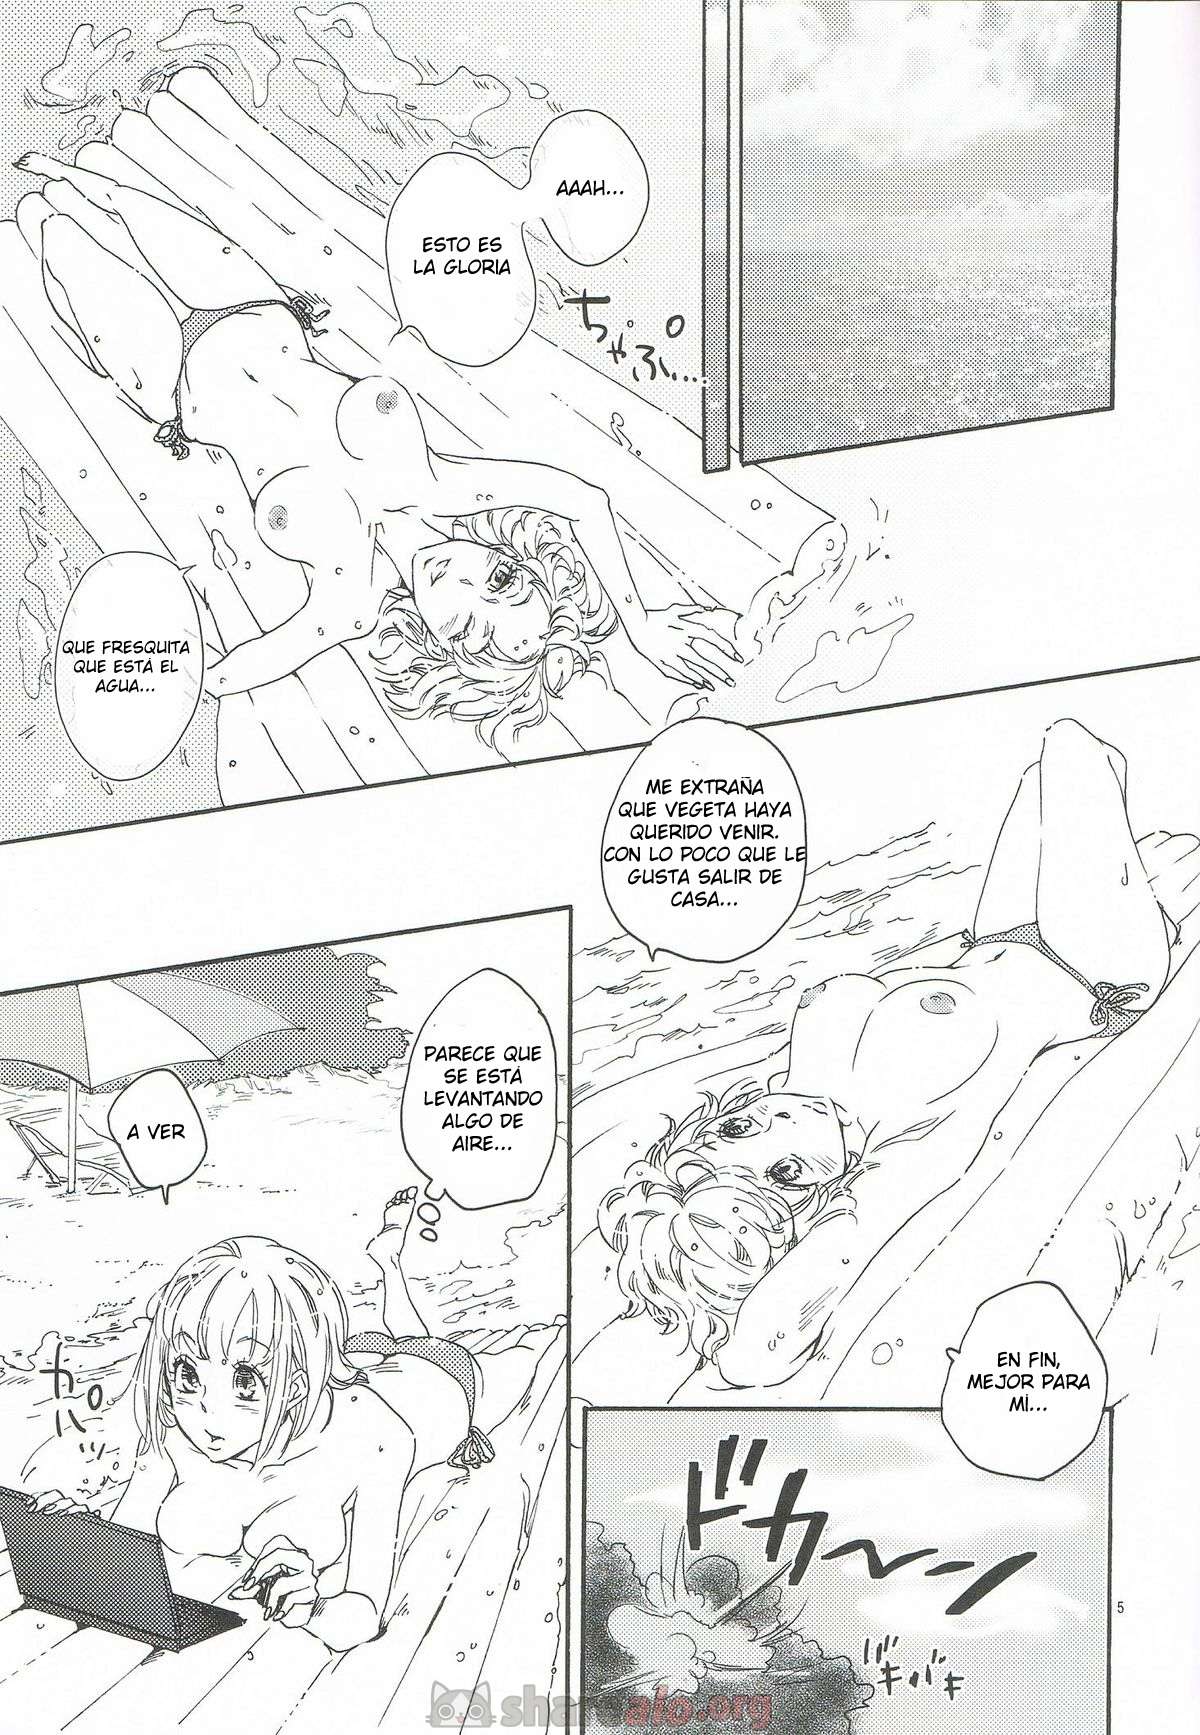 Summer (Verano) DBZ - 4 - Comics Porno - Hentai Manga - Cartoon XXX